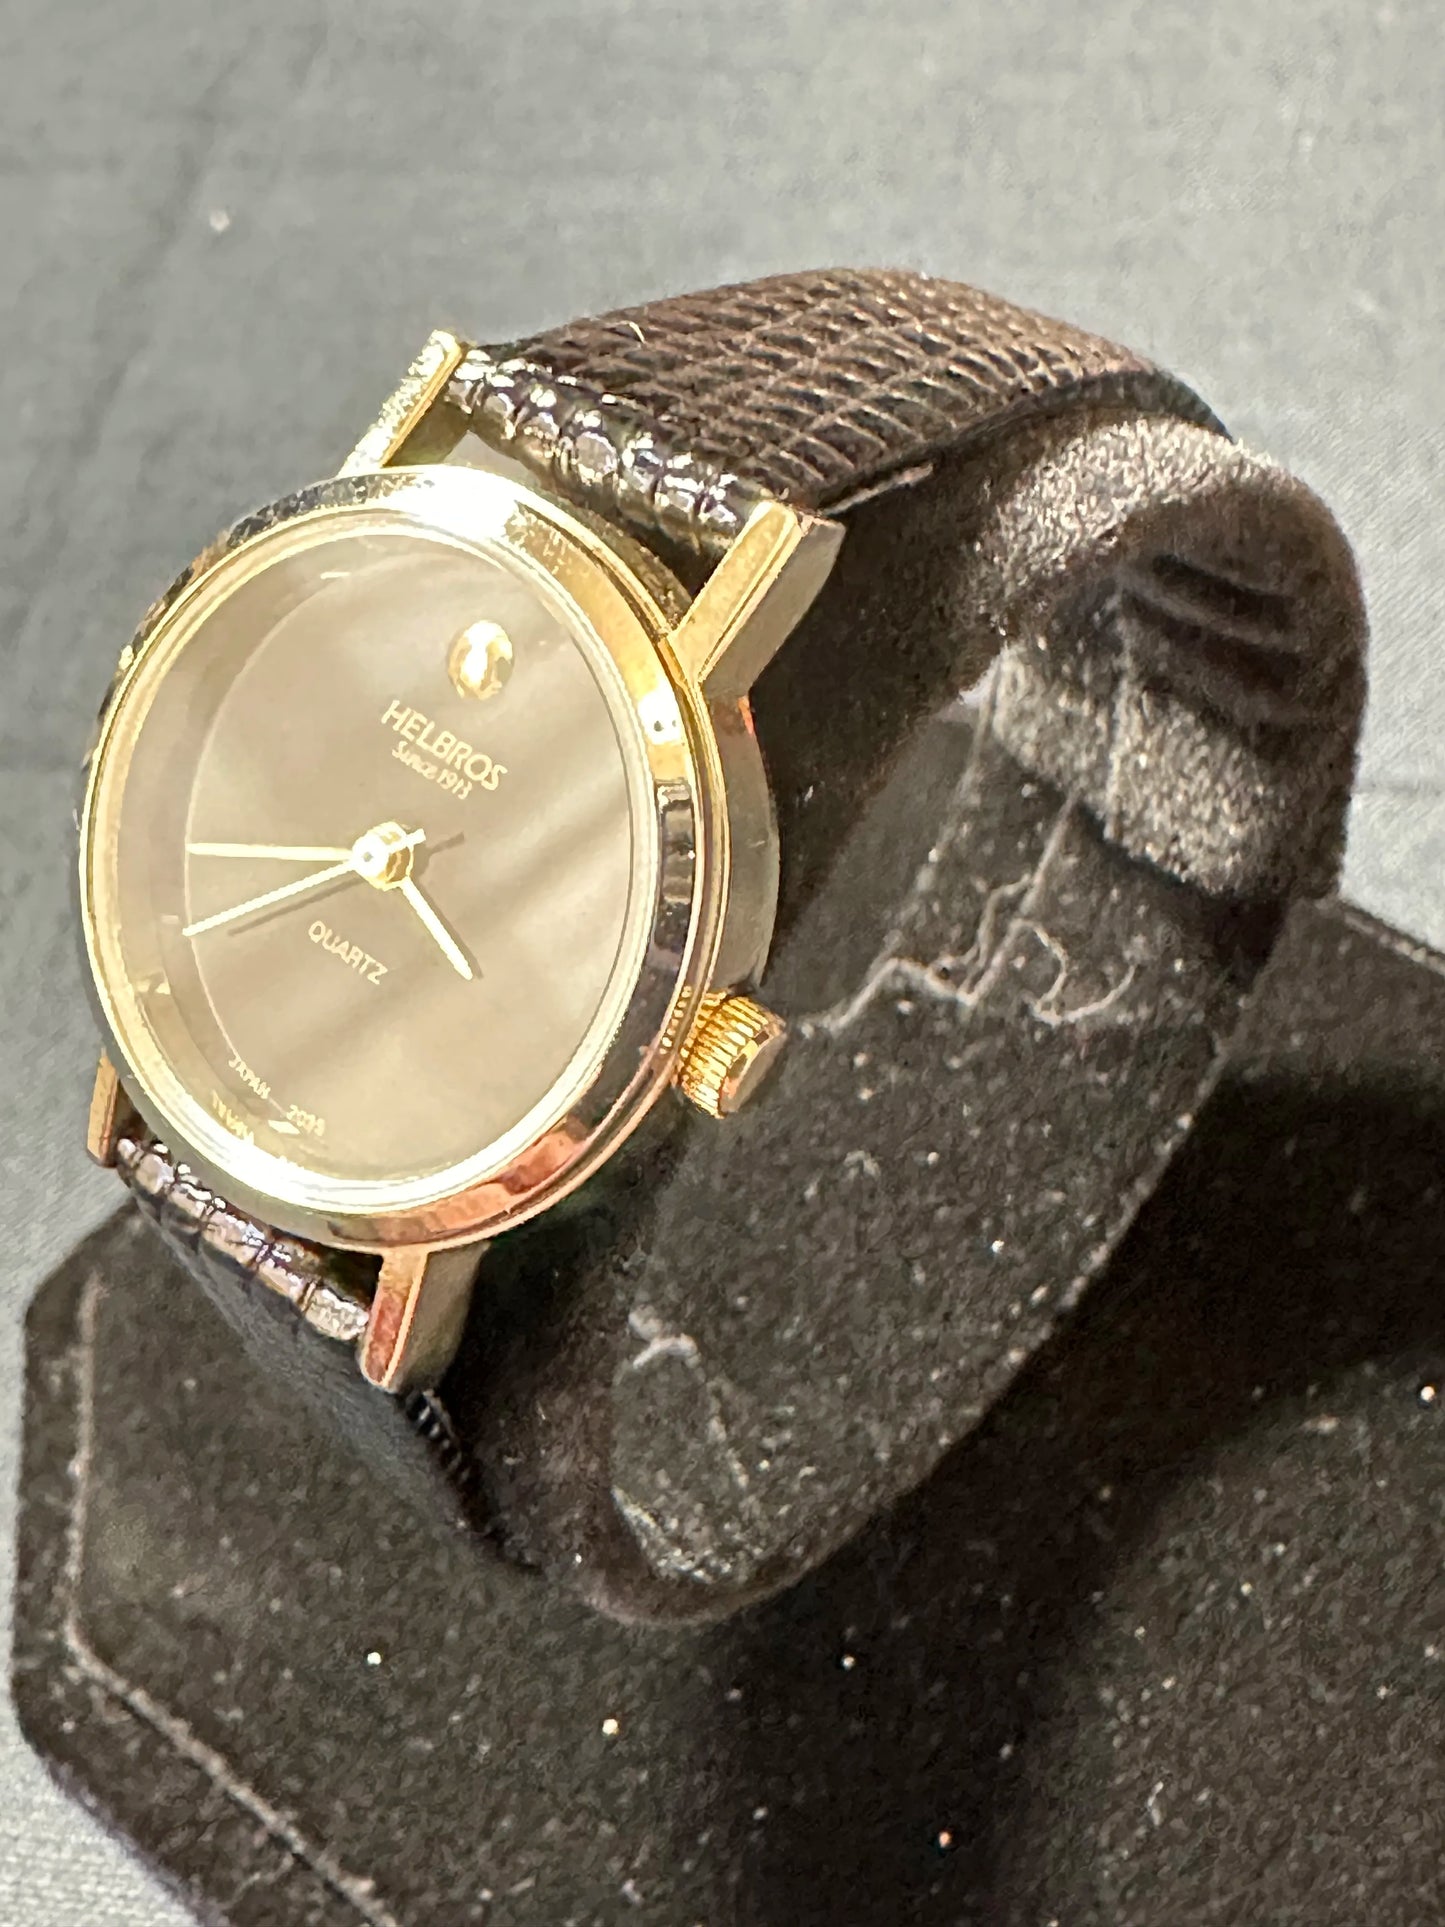 Helbros Ladies Quartz Watch - Black Leather strap